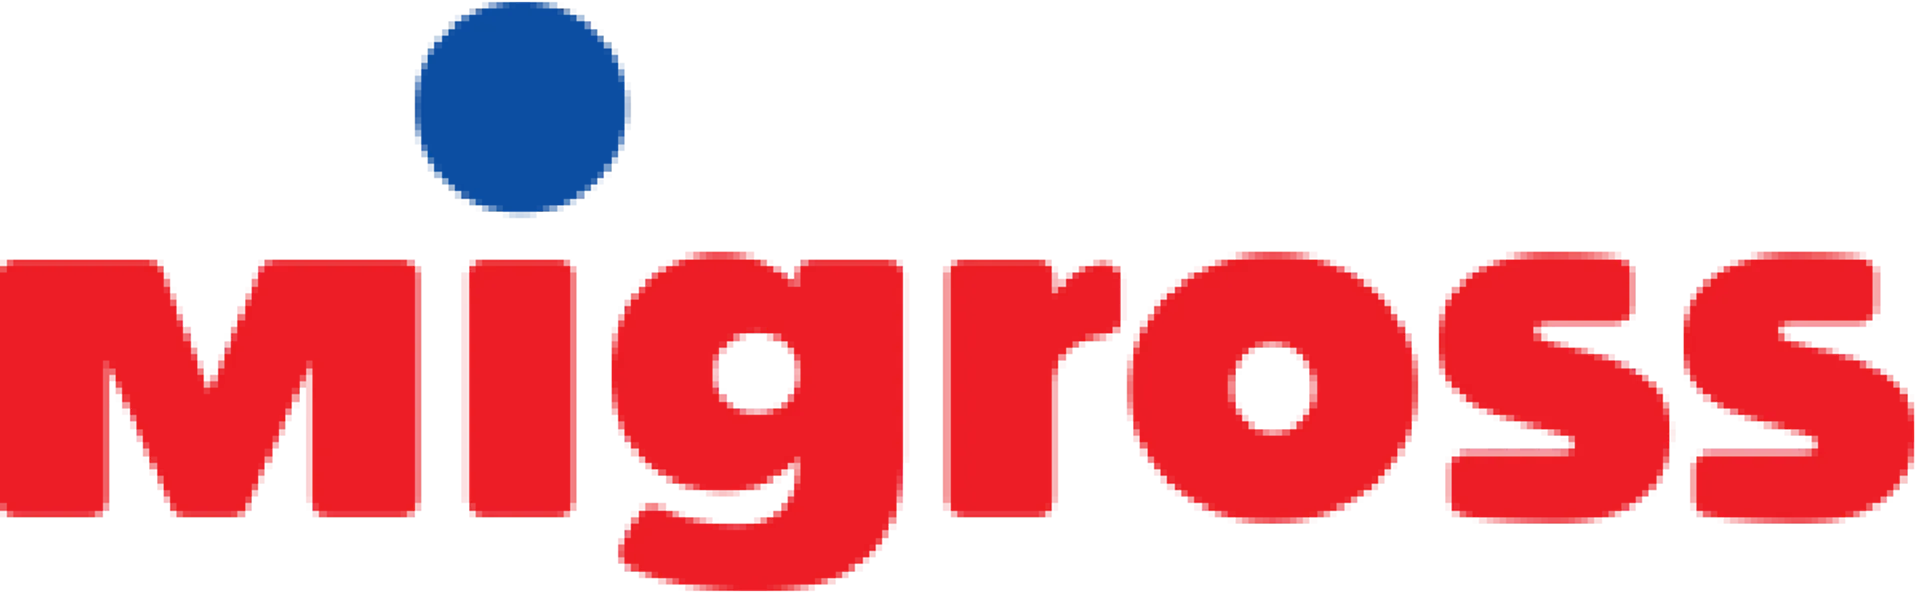 MIGROSS SUPERMERCATI logo